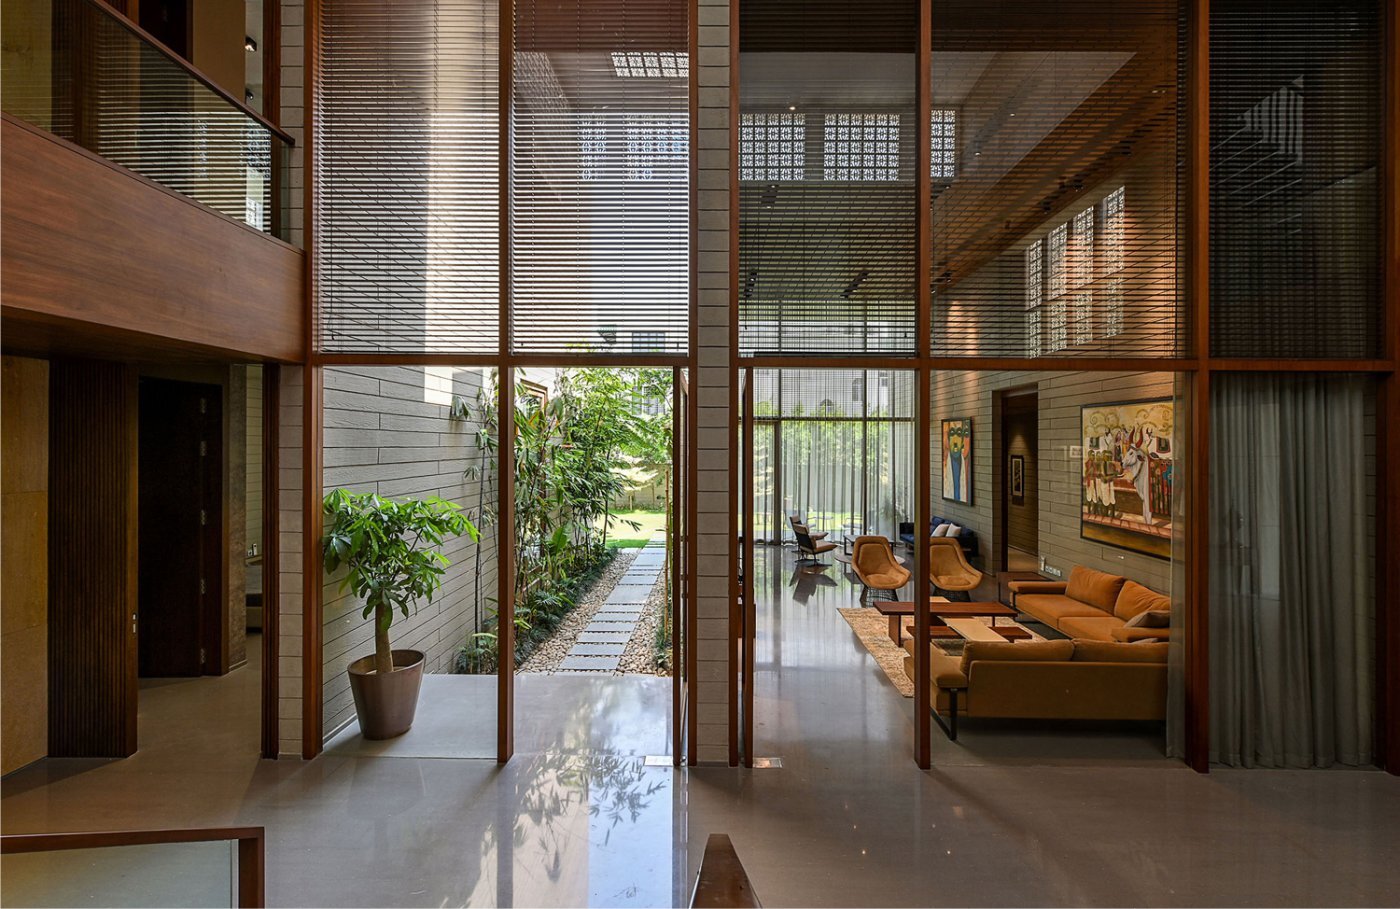 Sanjay-Puri-Architects-Visual-Atelier-8-18-Screens5.jpg